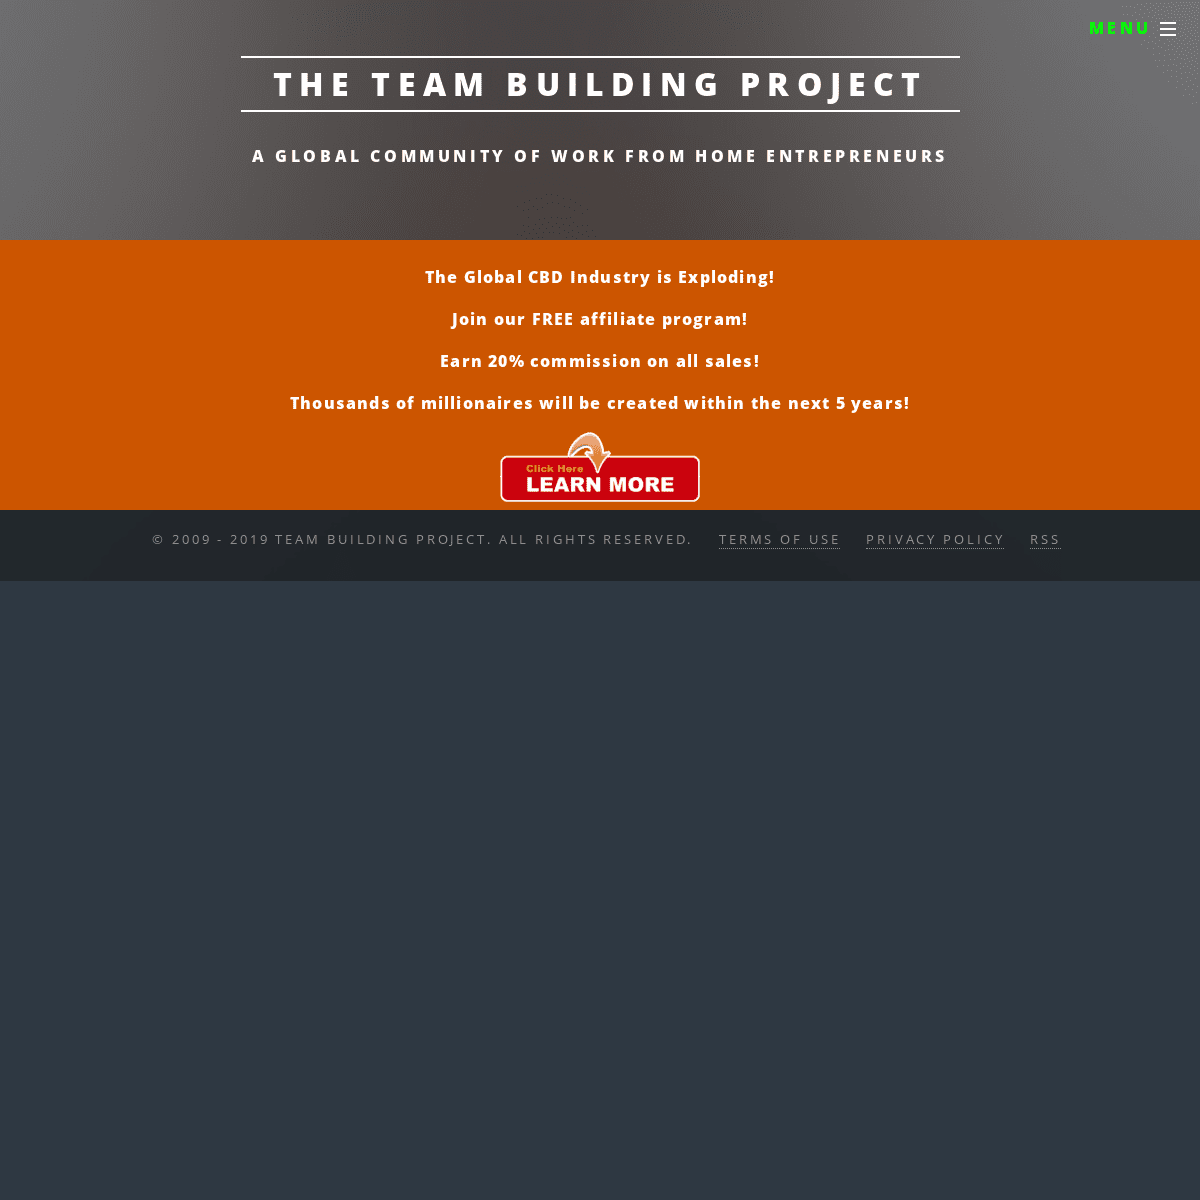 A complete backup of teambuildingproject.com